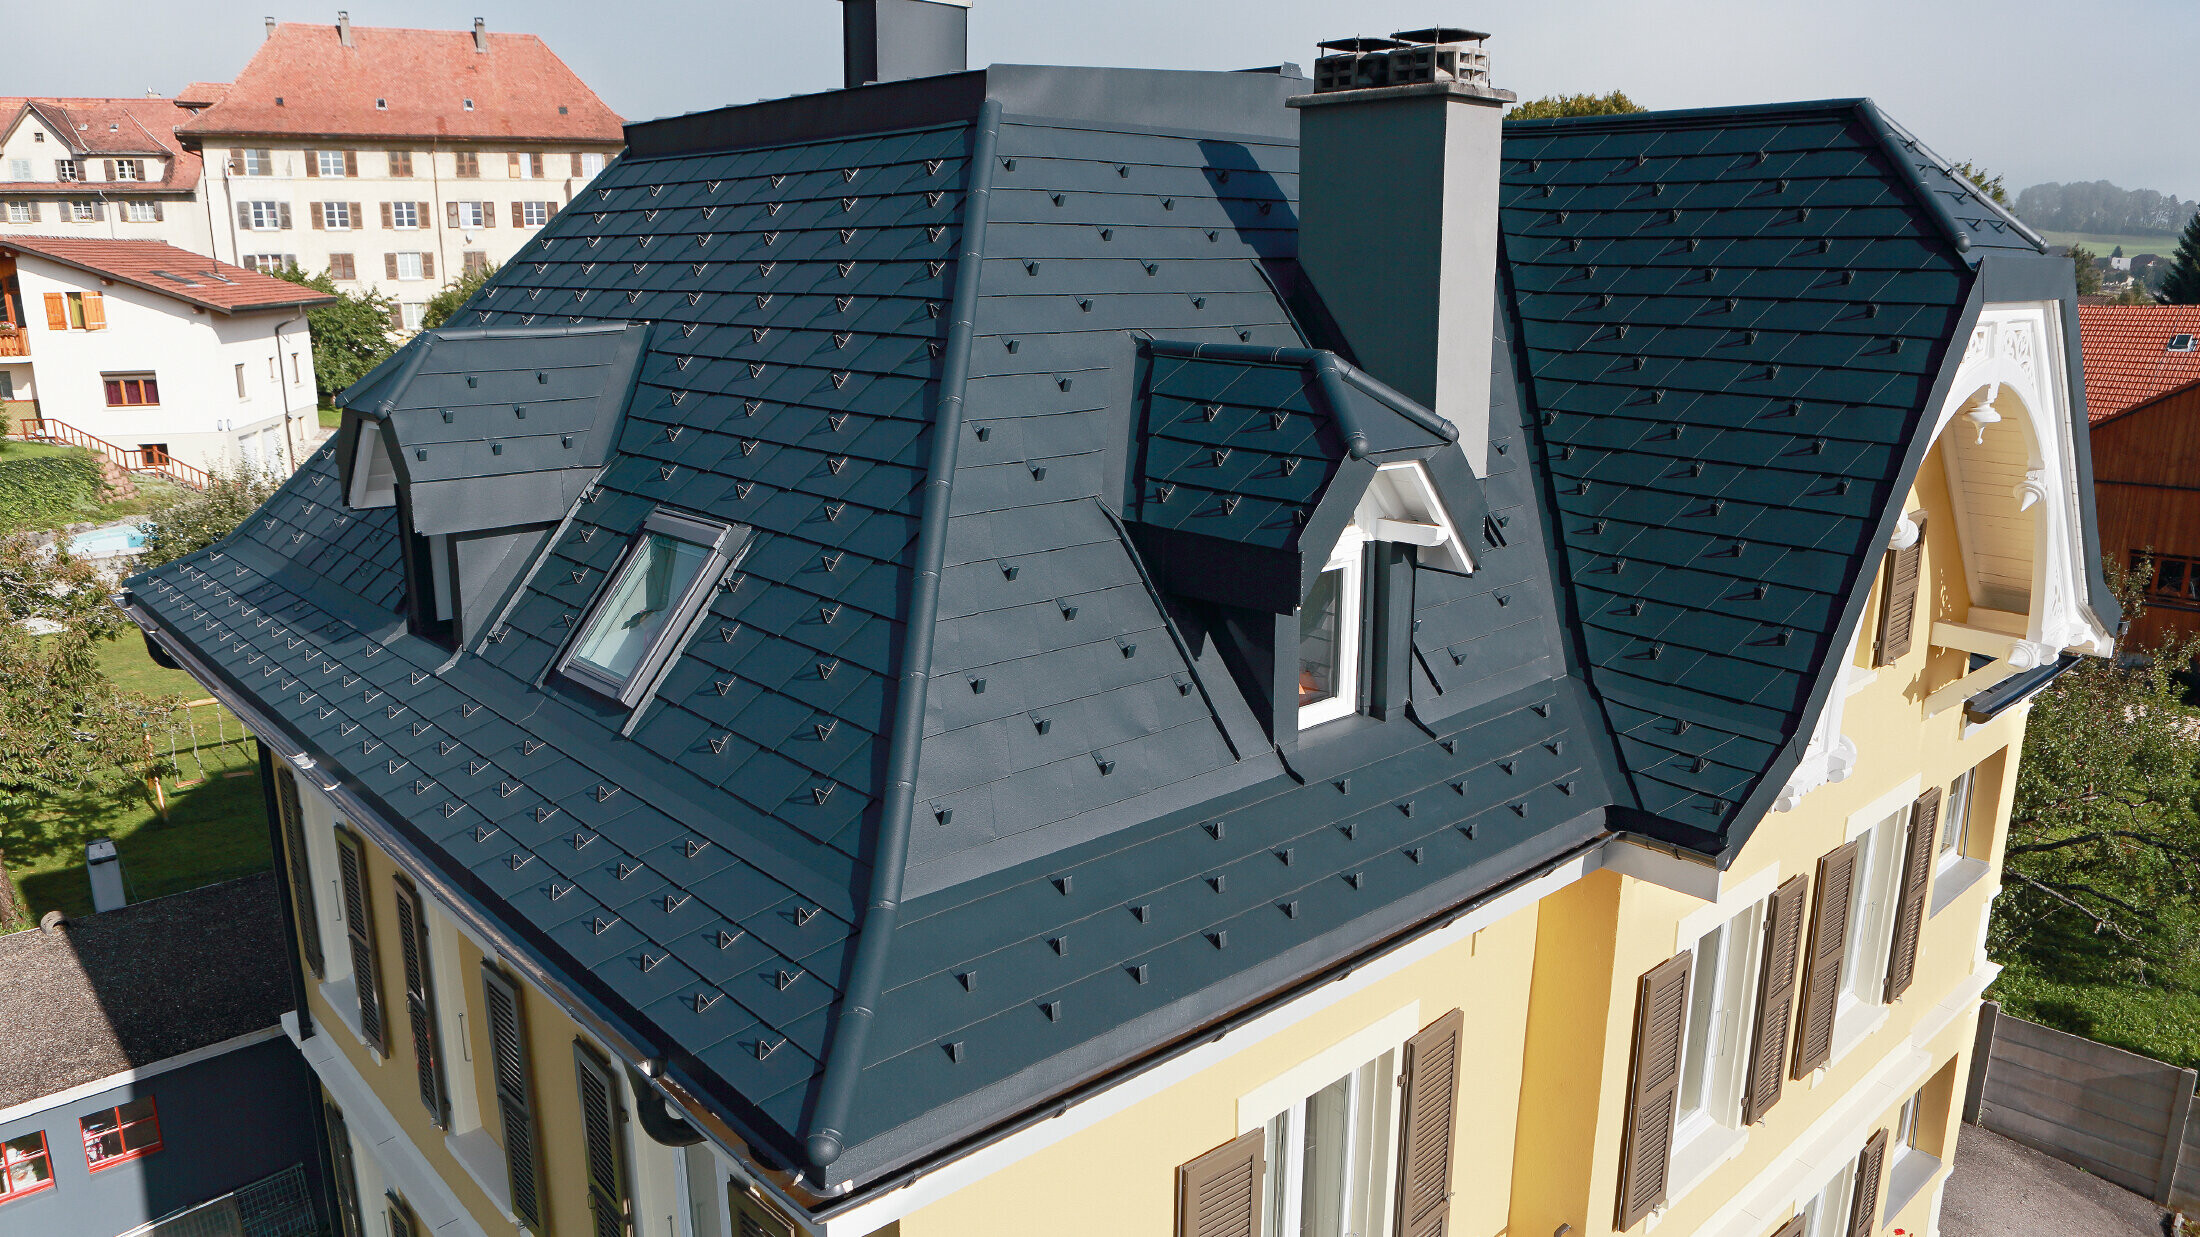 Vila u Švicarskoj, krov ima brojne upuštene uvale i male krovne kućice, krov je pokriven aluminijskom šindrom tvrtke PREFA u P.10 antracit boji.